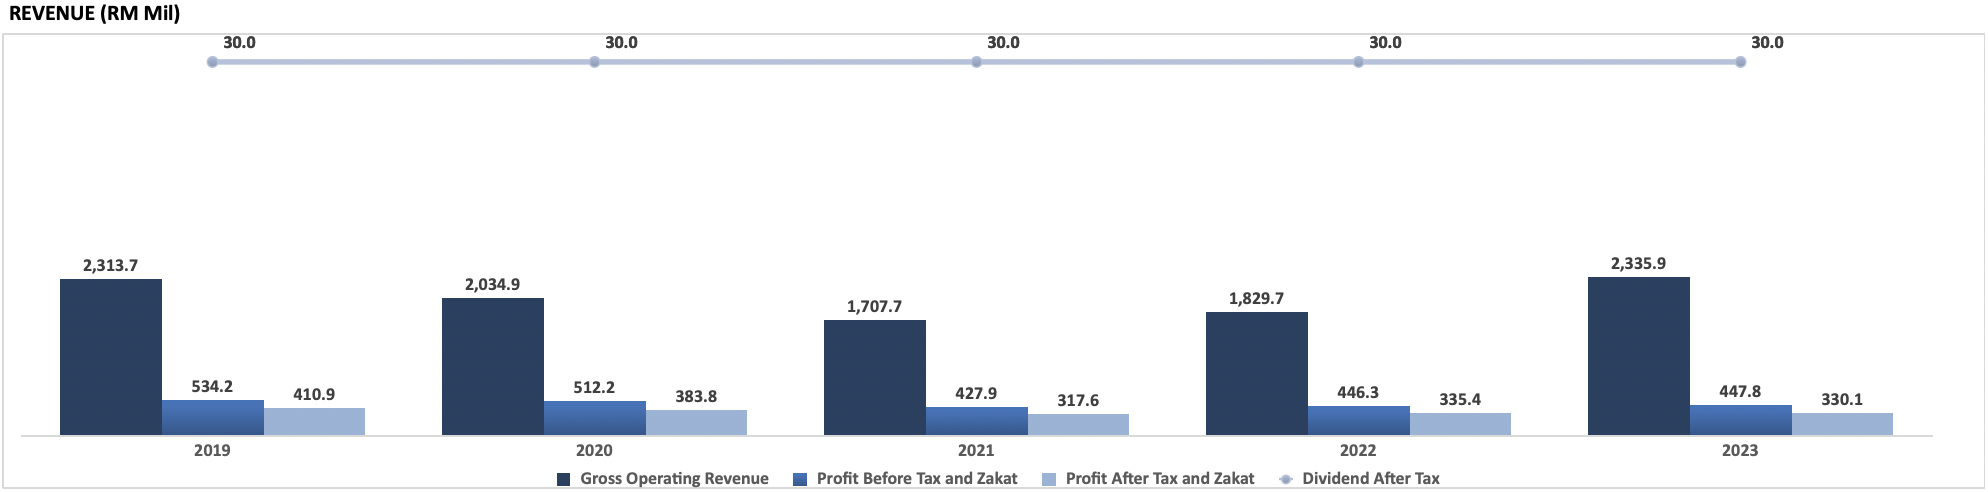 CHB-revenue-2023.png 